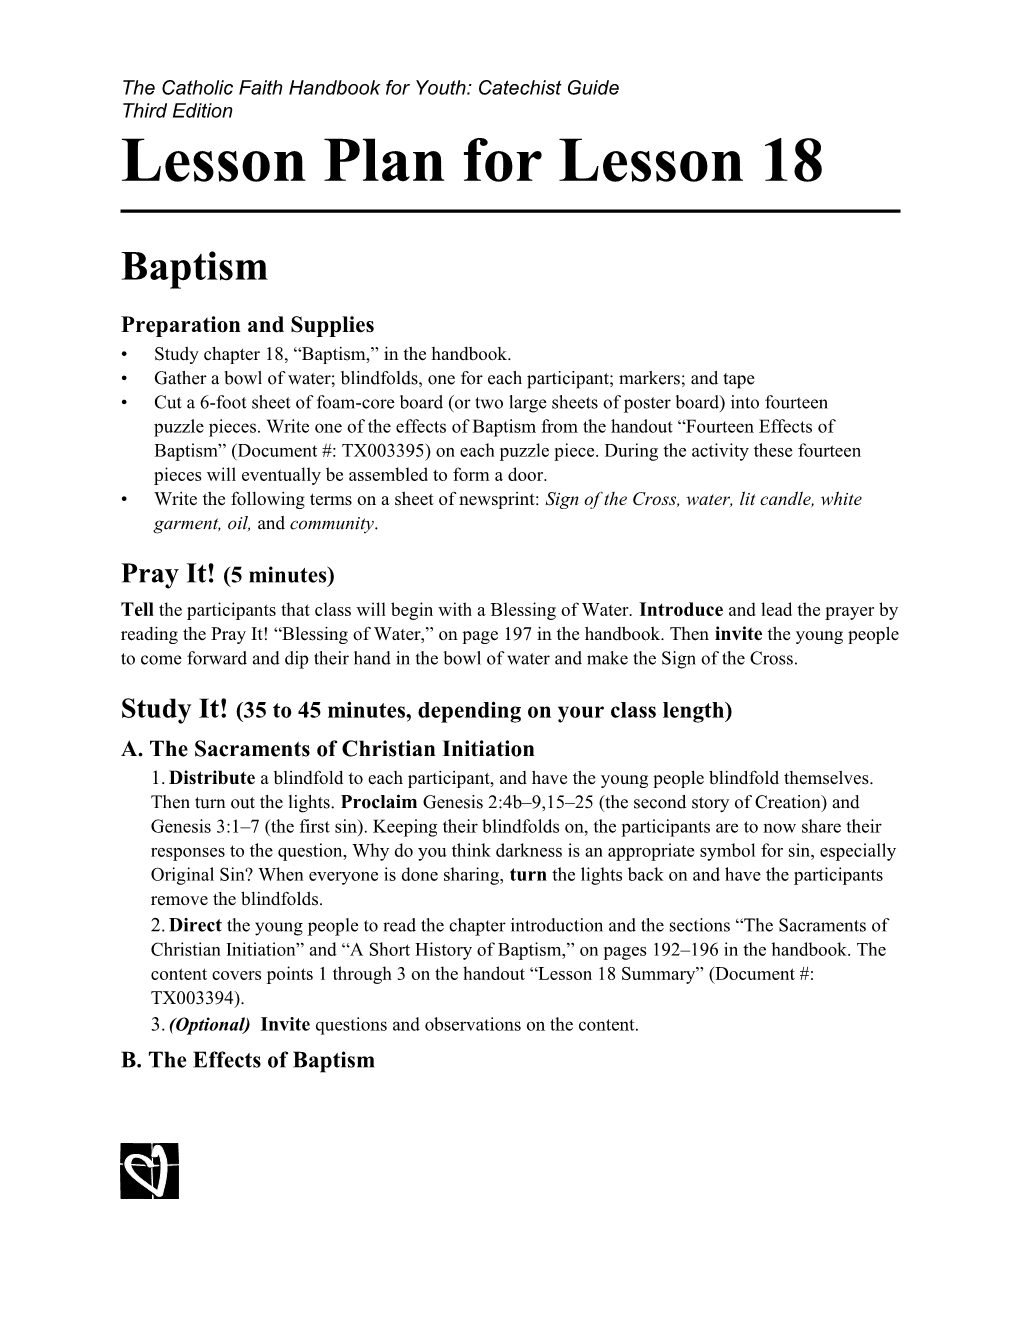 Lesson Plan for Lesson 18